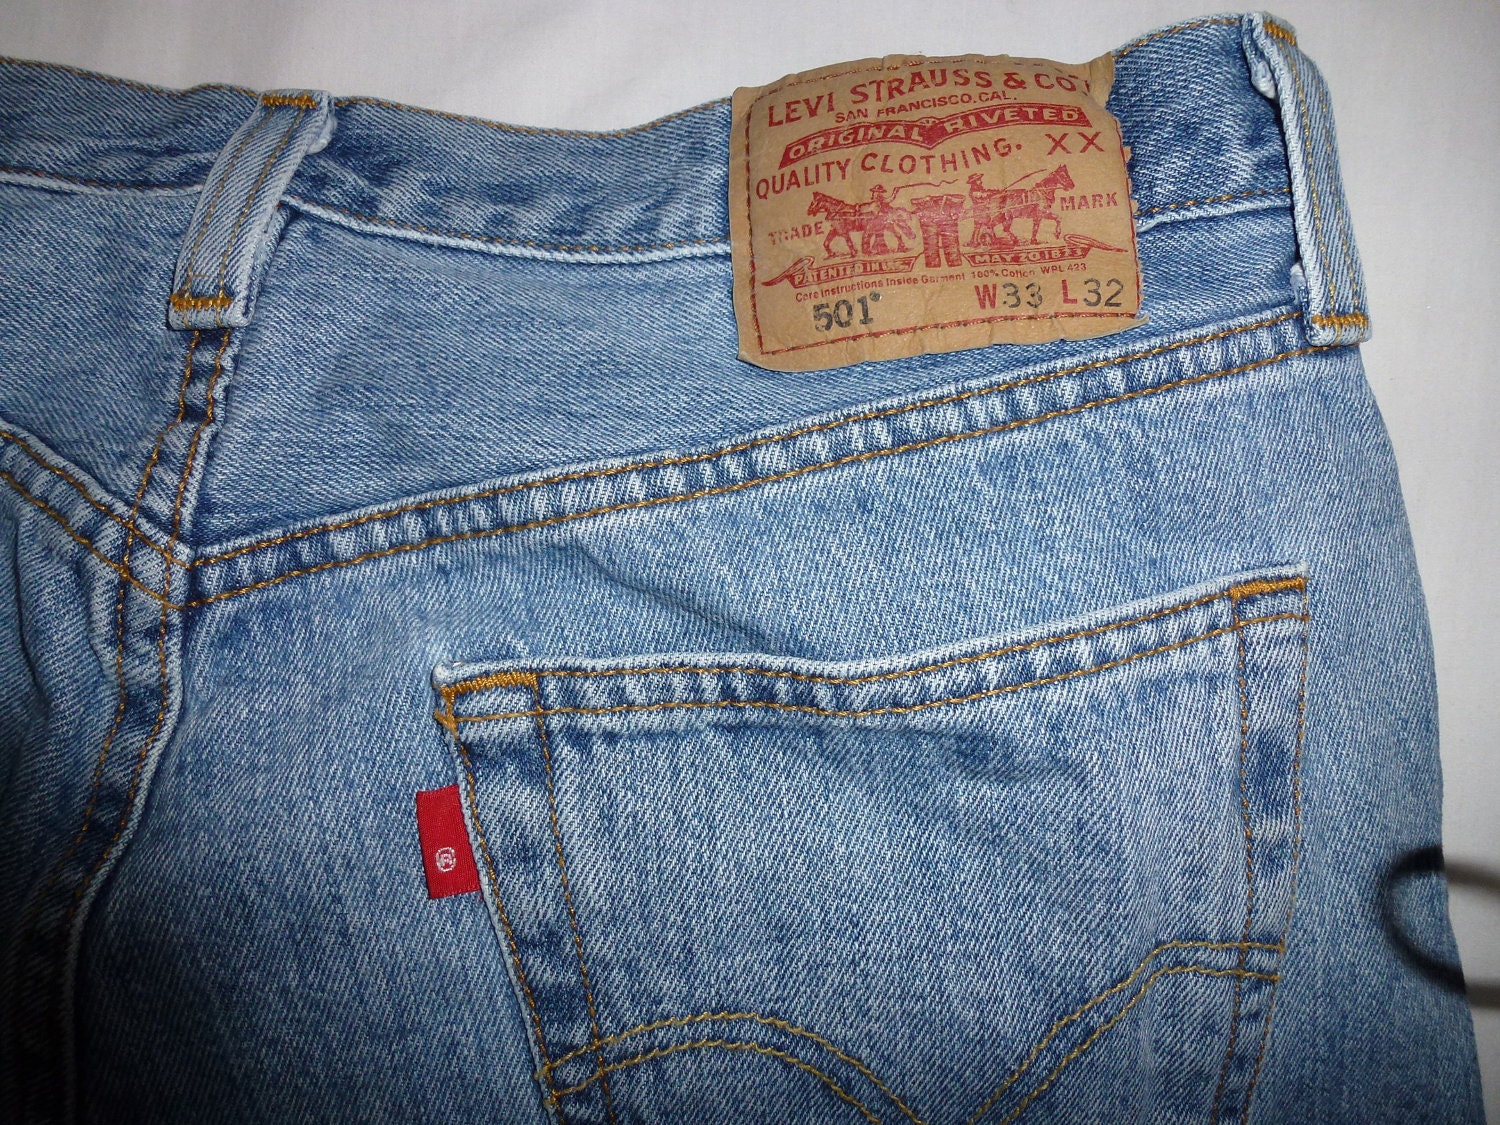 Vintage Levi's 501 jeans red label stonewash by BlondieBlueEyes